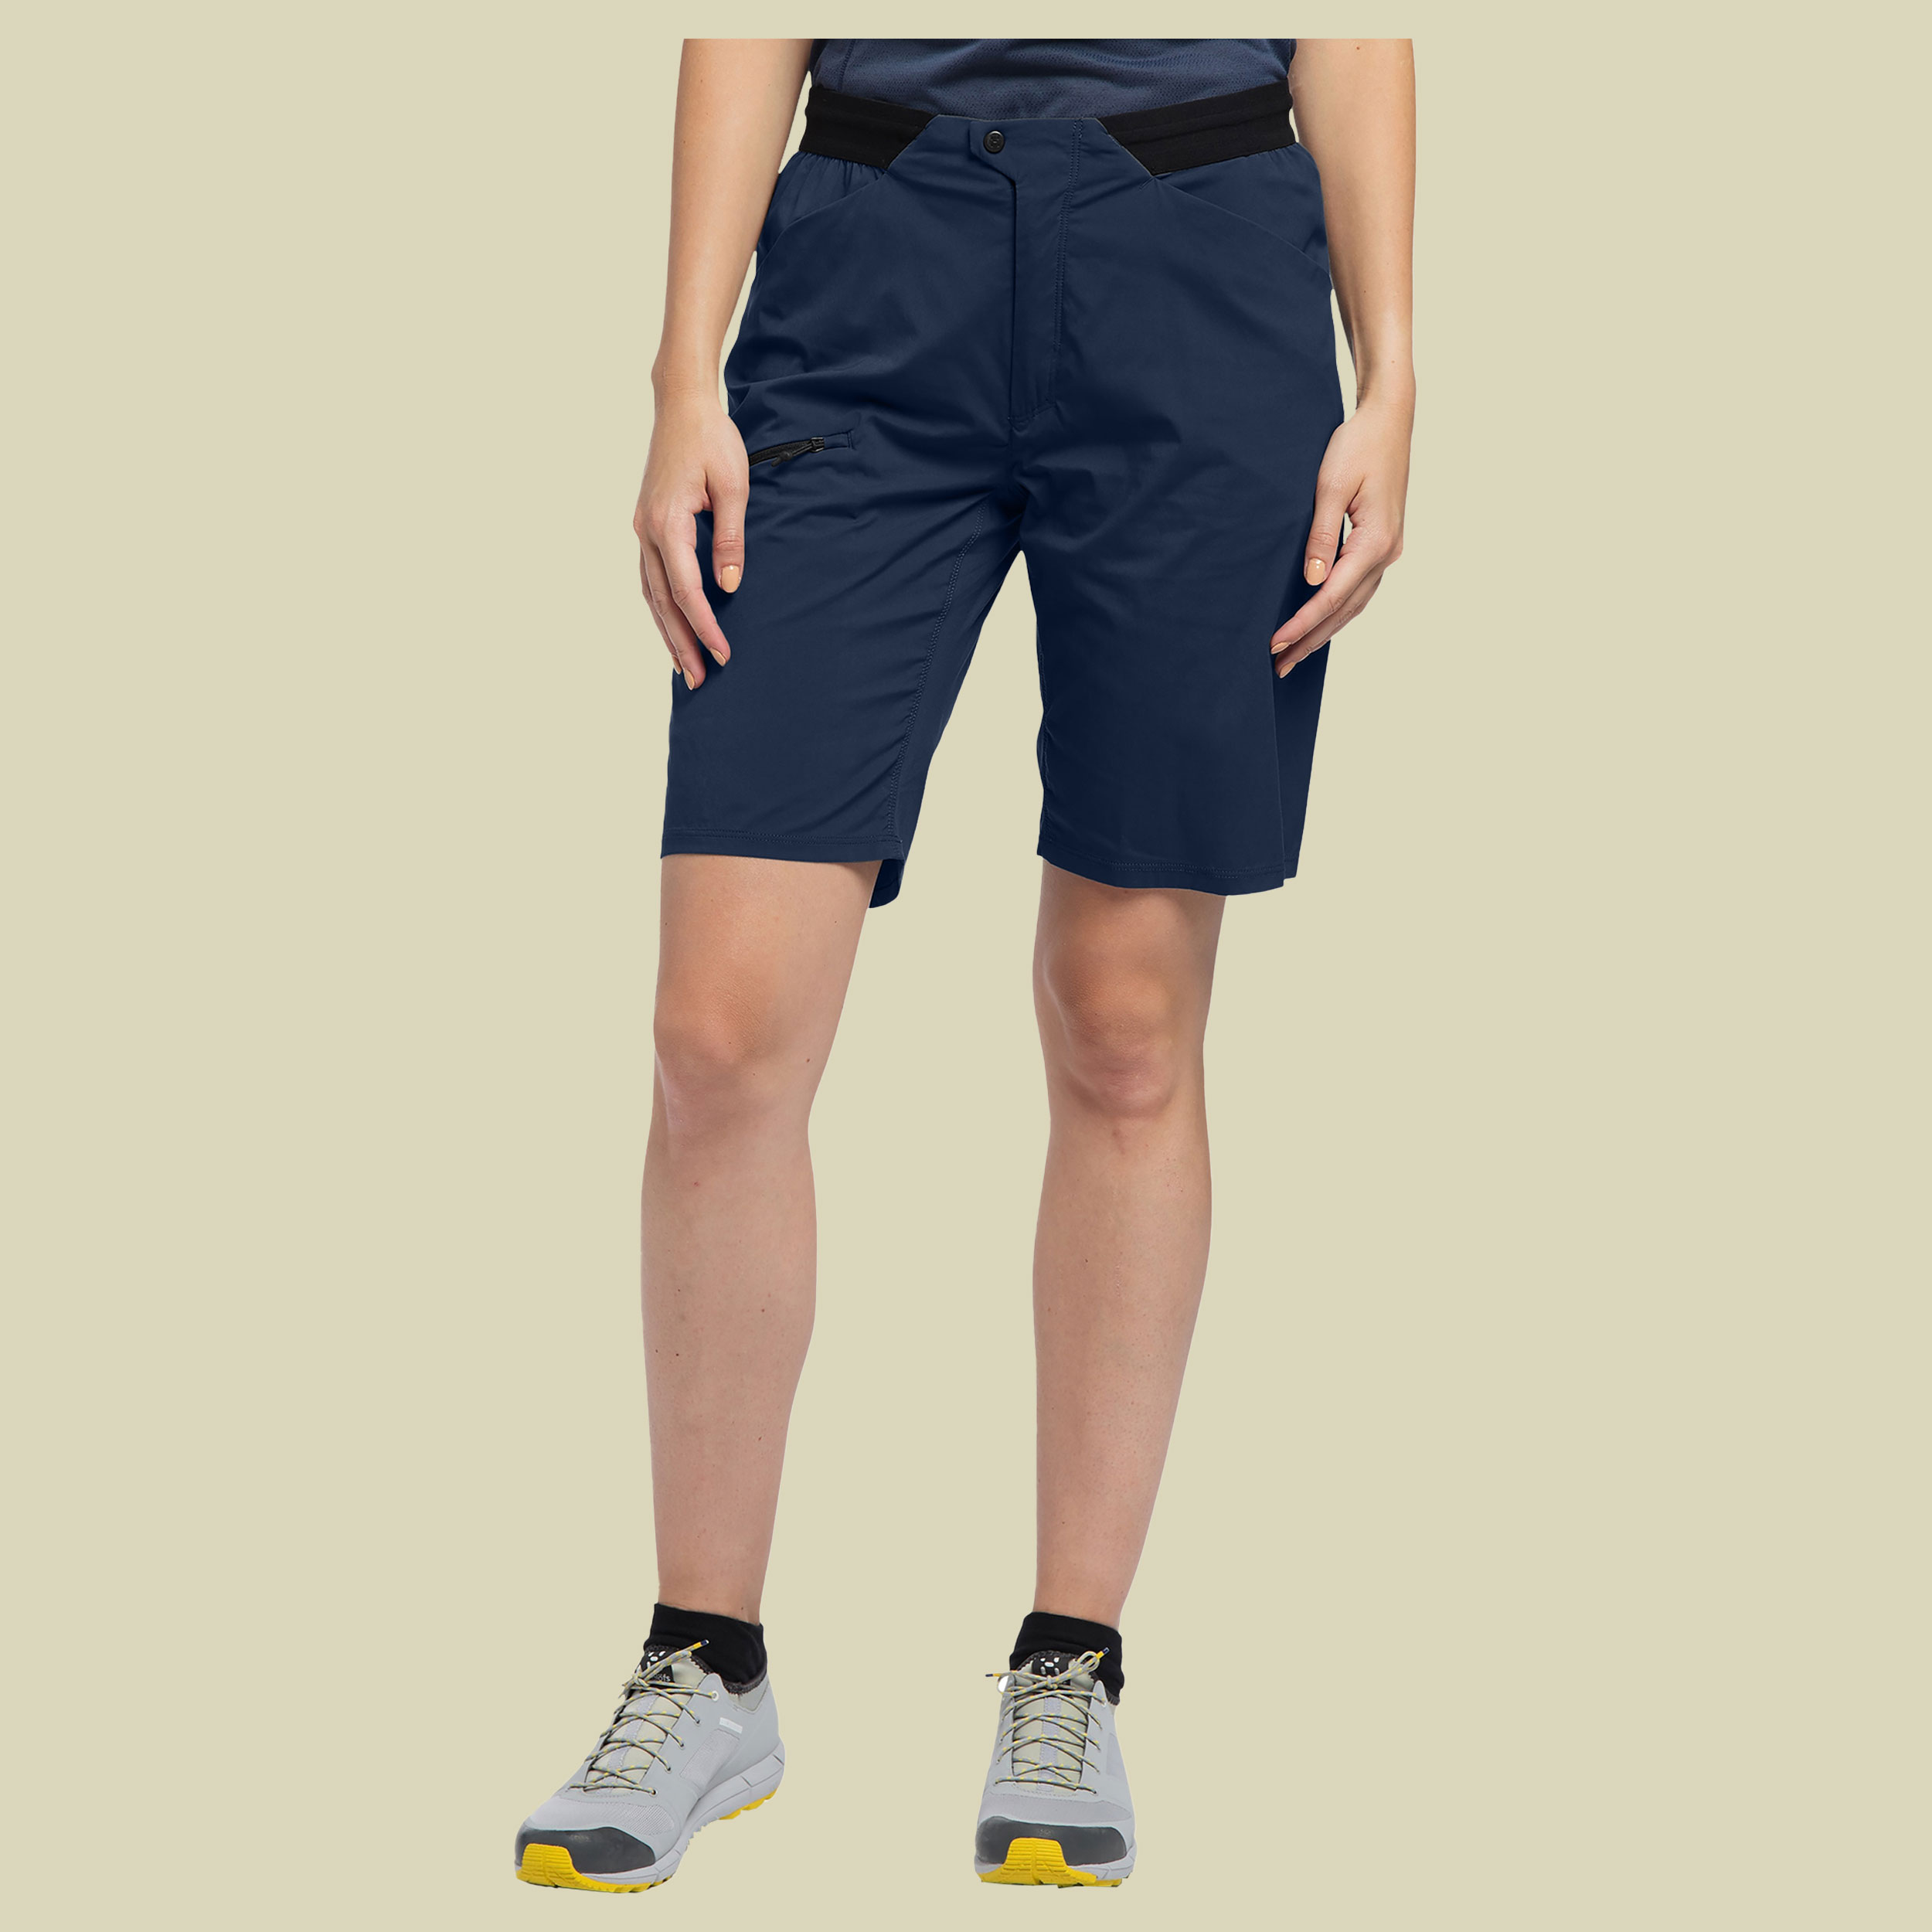 L.I.M Fuse Shorts Women Größe 40 Farbe tarn blue